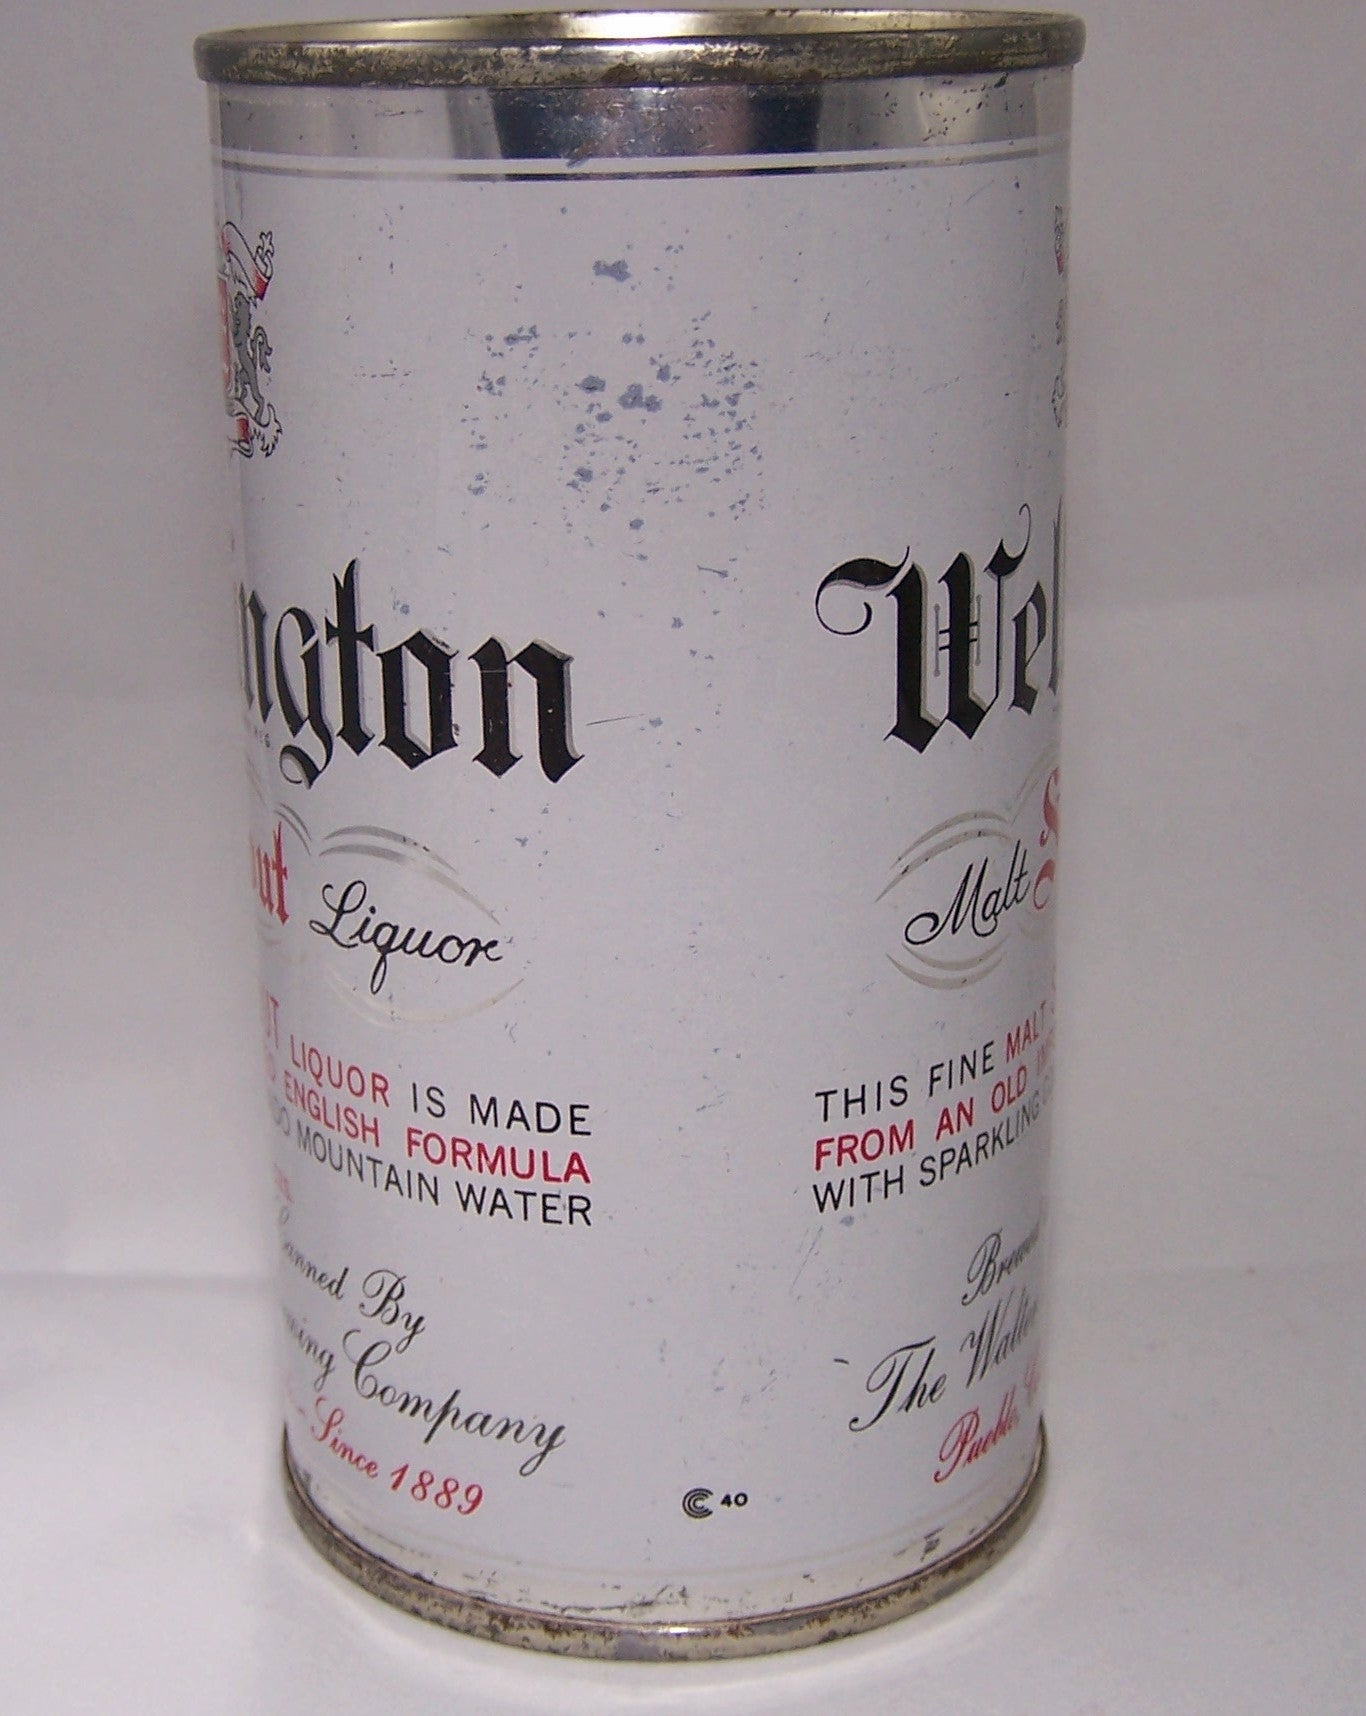 Wellington Stout Malt Liquor, USBC 145-3, Grade 1/1-